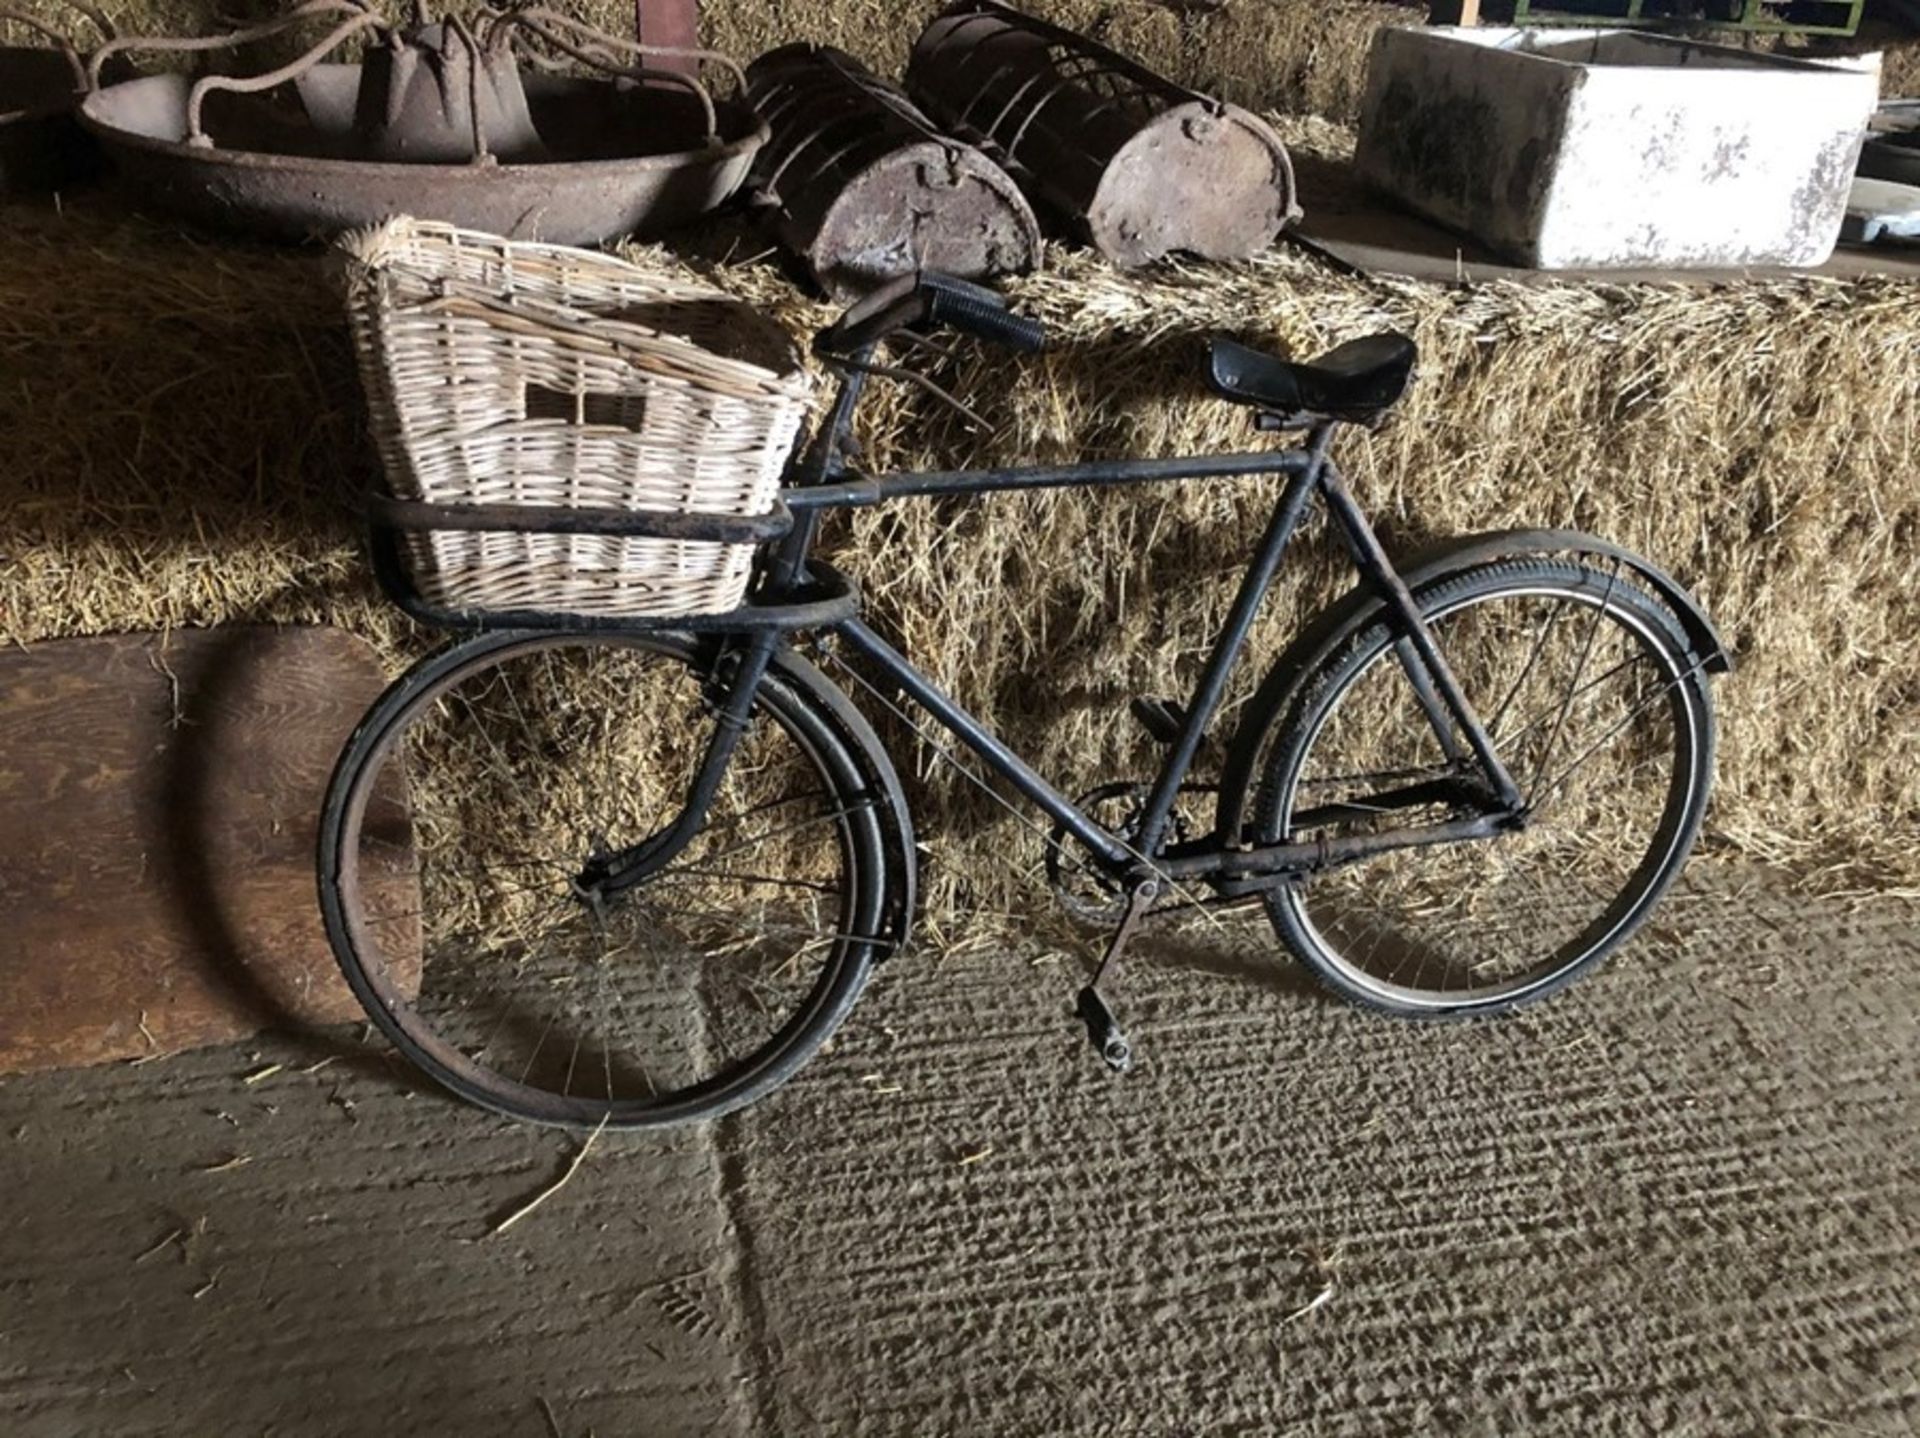 Vintage grocers bicycle with wicker basket